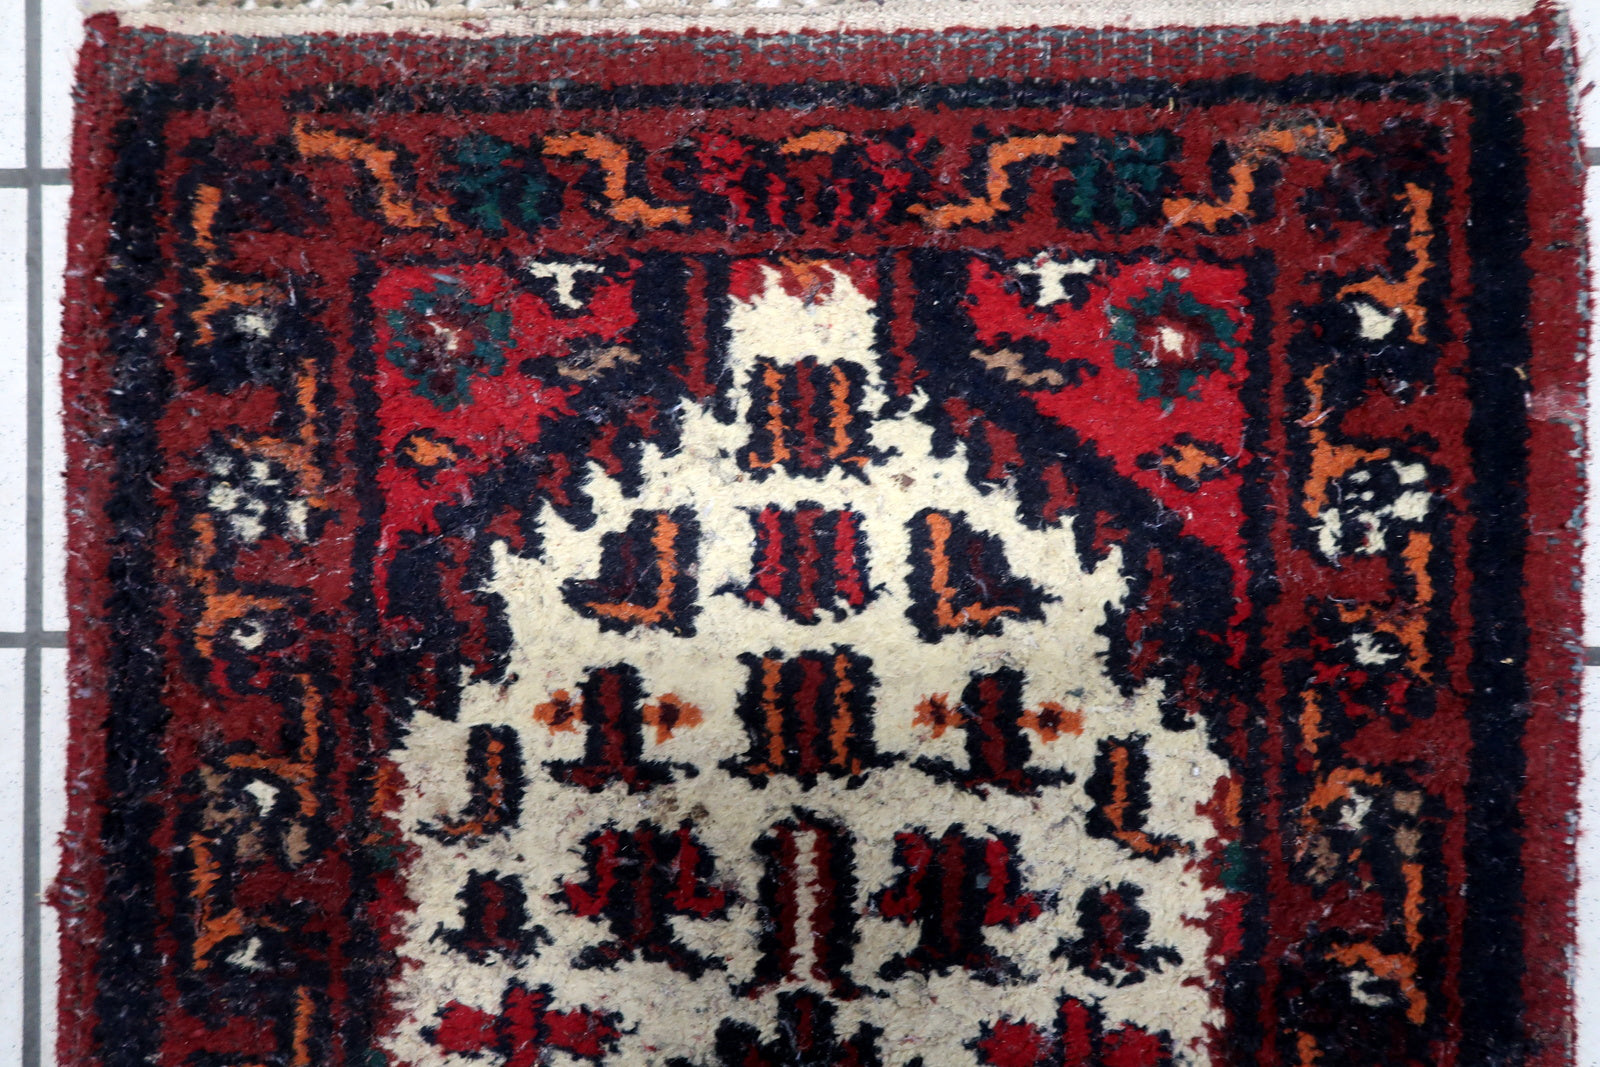 Intricate Rug Details - Vintage Persian-Style Hamadan